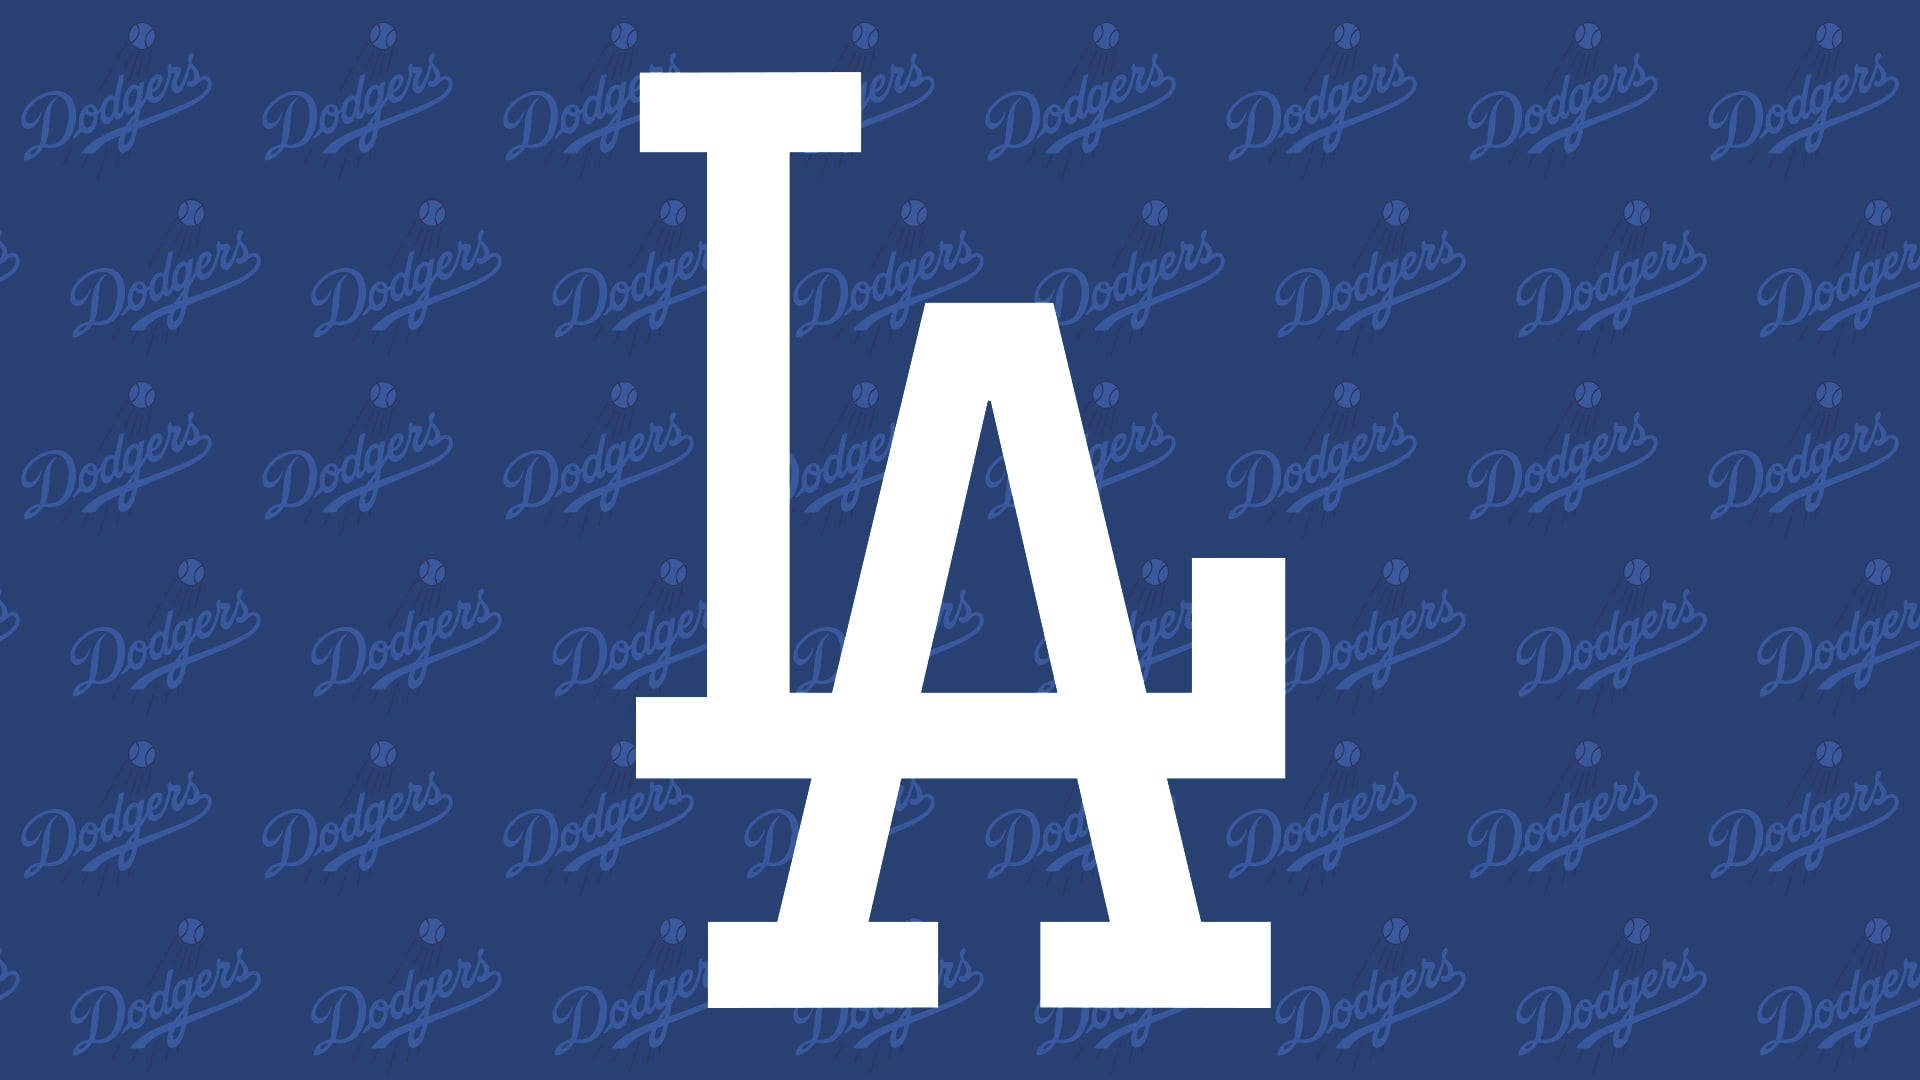 Los Angeles Dodgers Patterned Backdrop